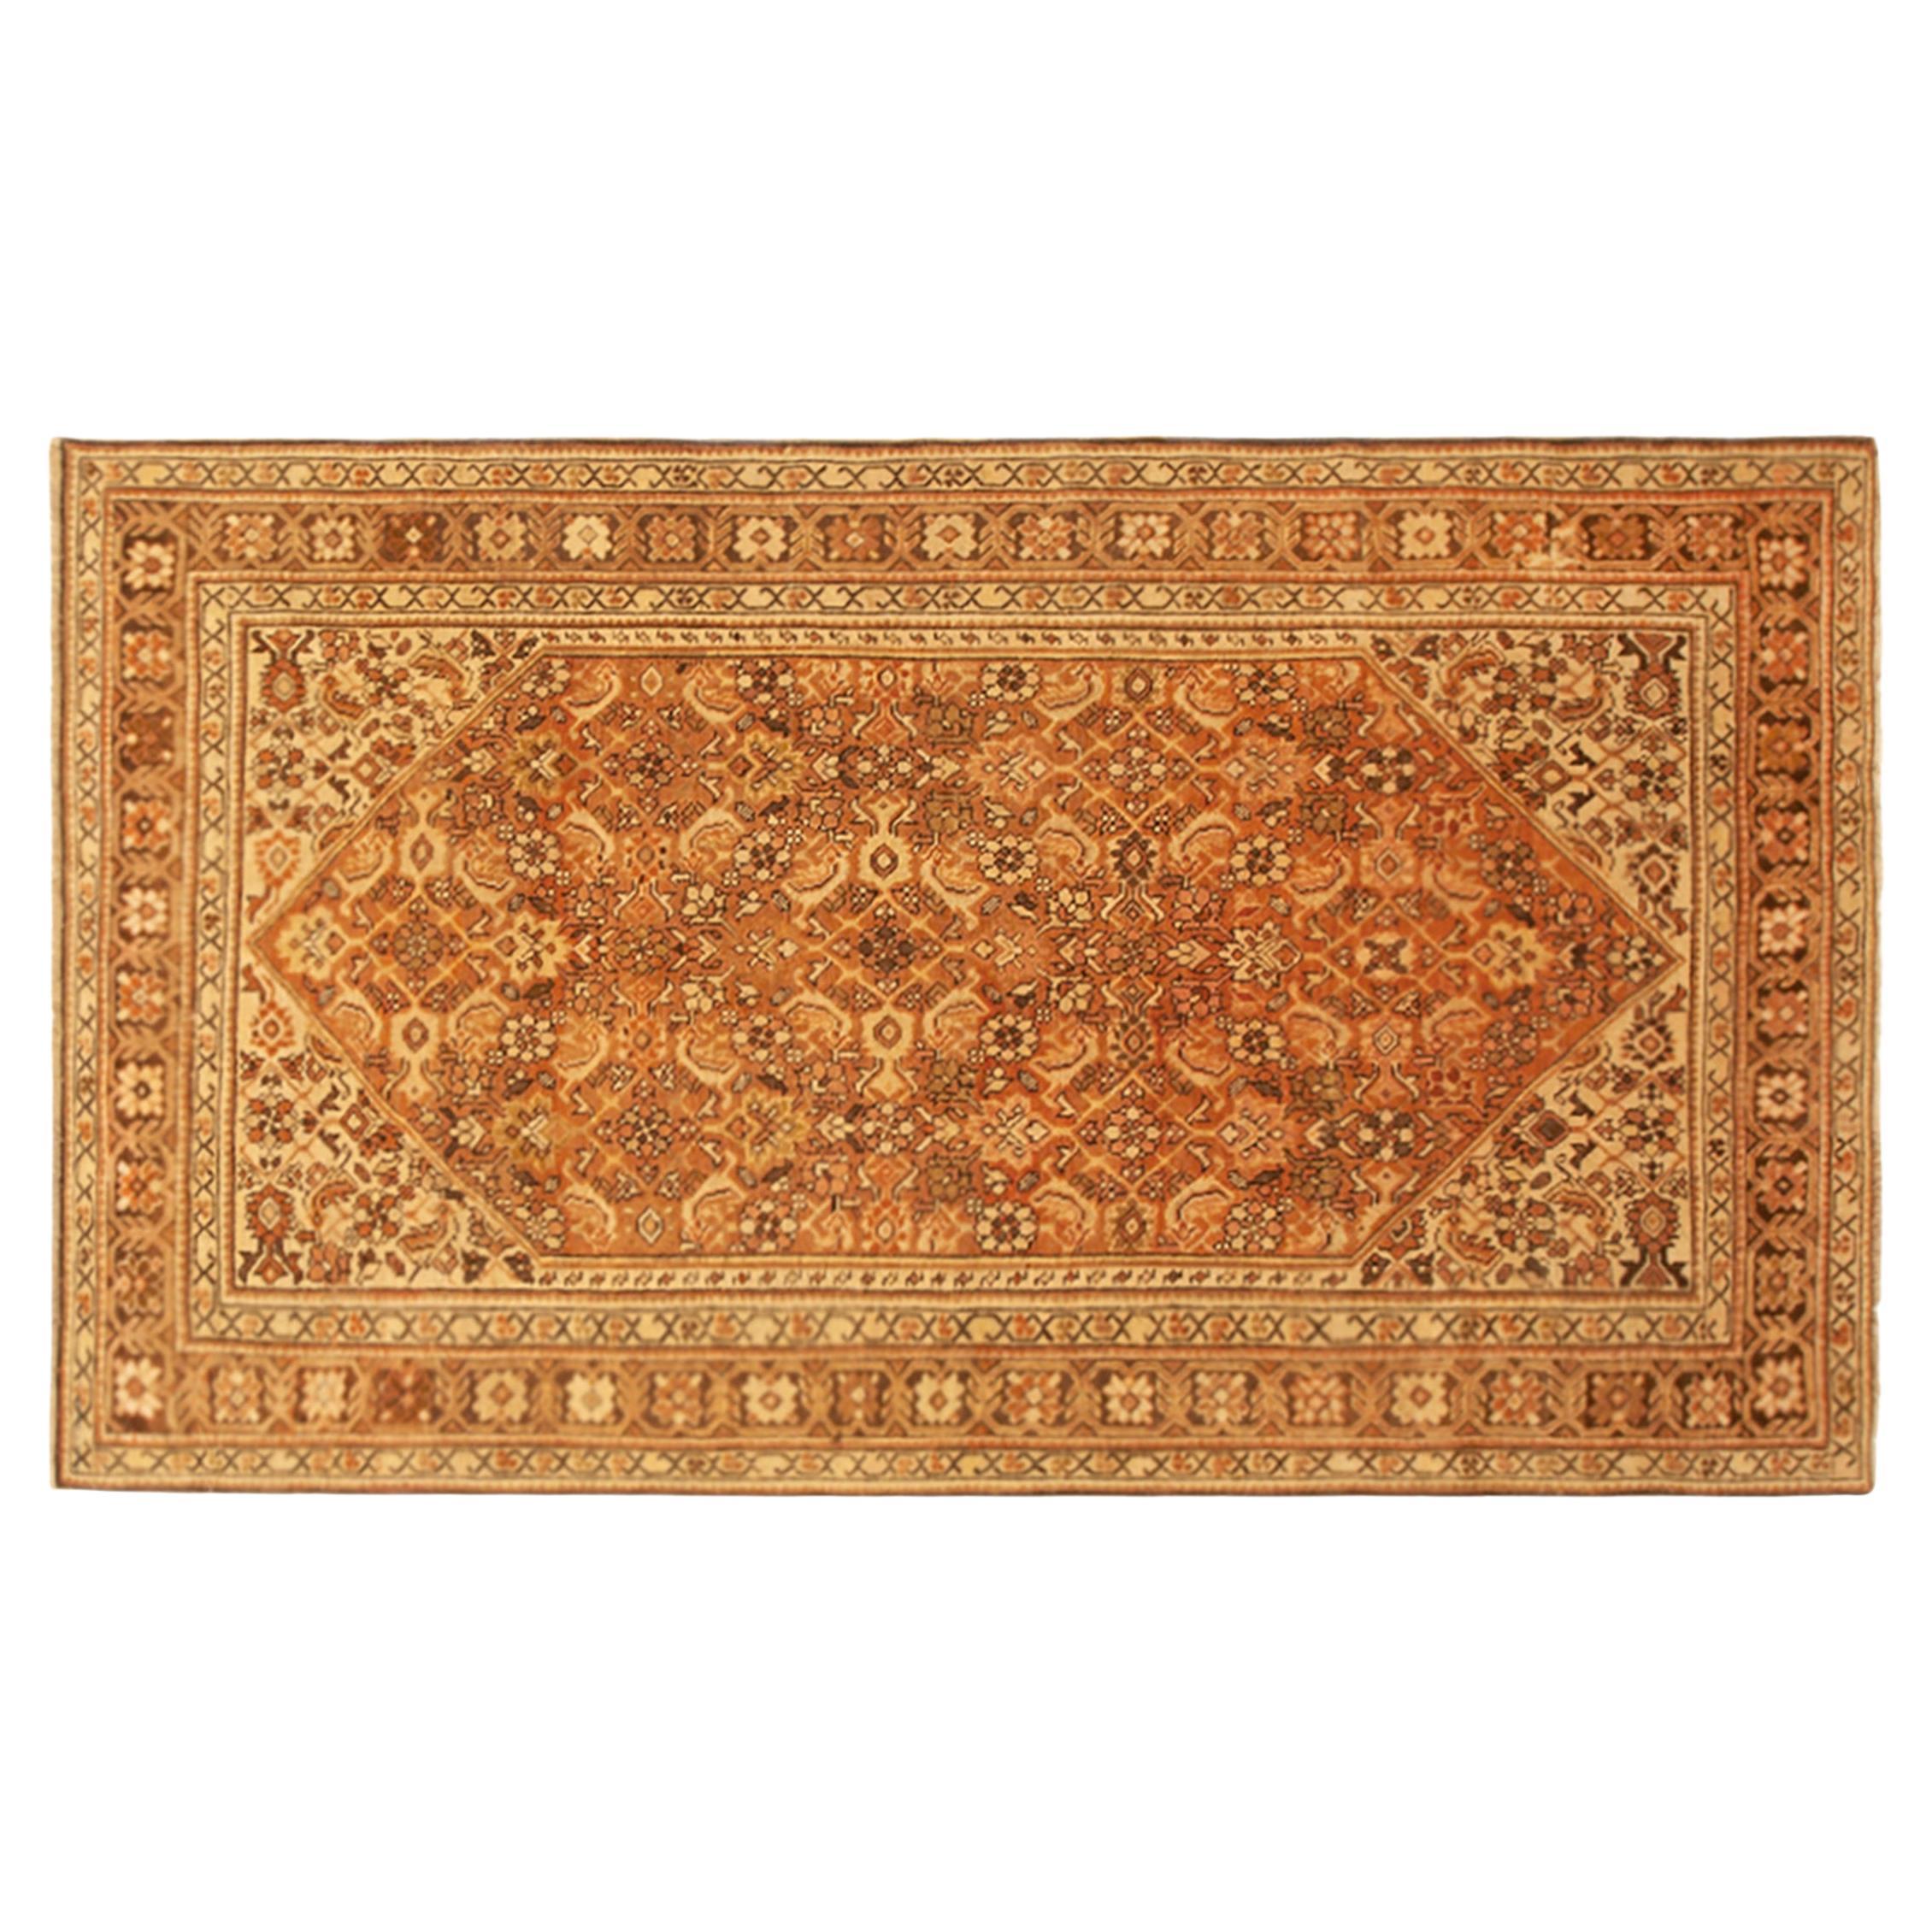 Antique Caucasian Karabagh Oriental Rug in Room Size with Herati Design